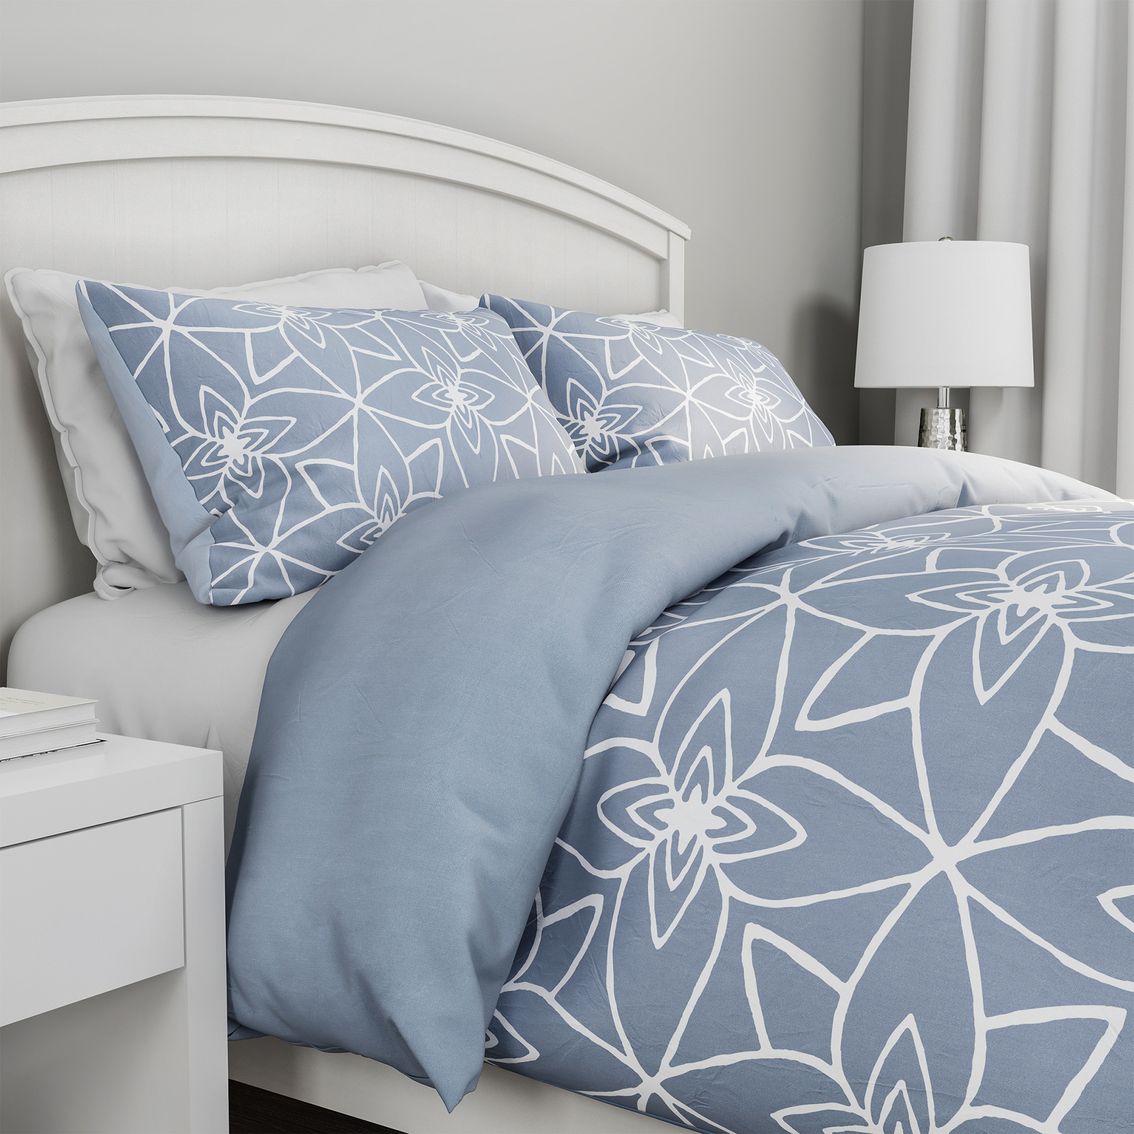 Lavish Home 3 pc. Comforter Set with Exclusive Stargaze Design - Image 3 of 7